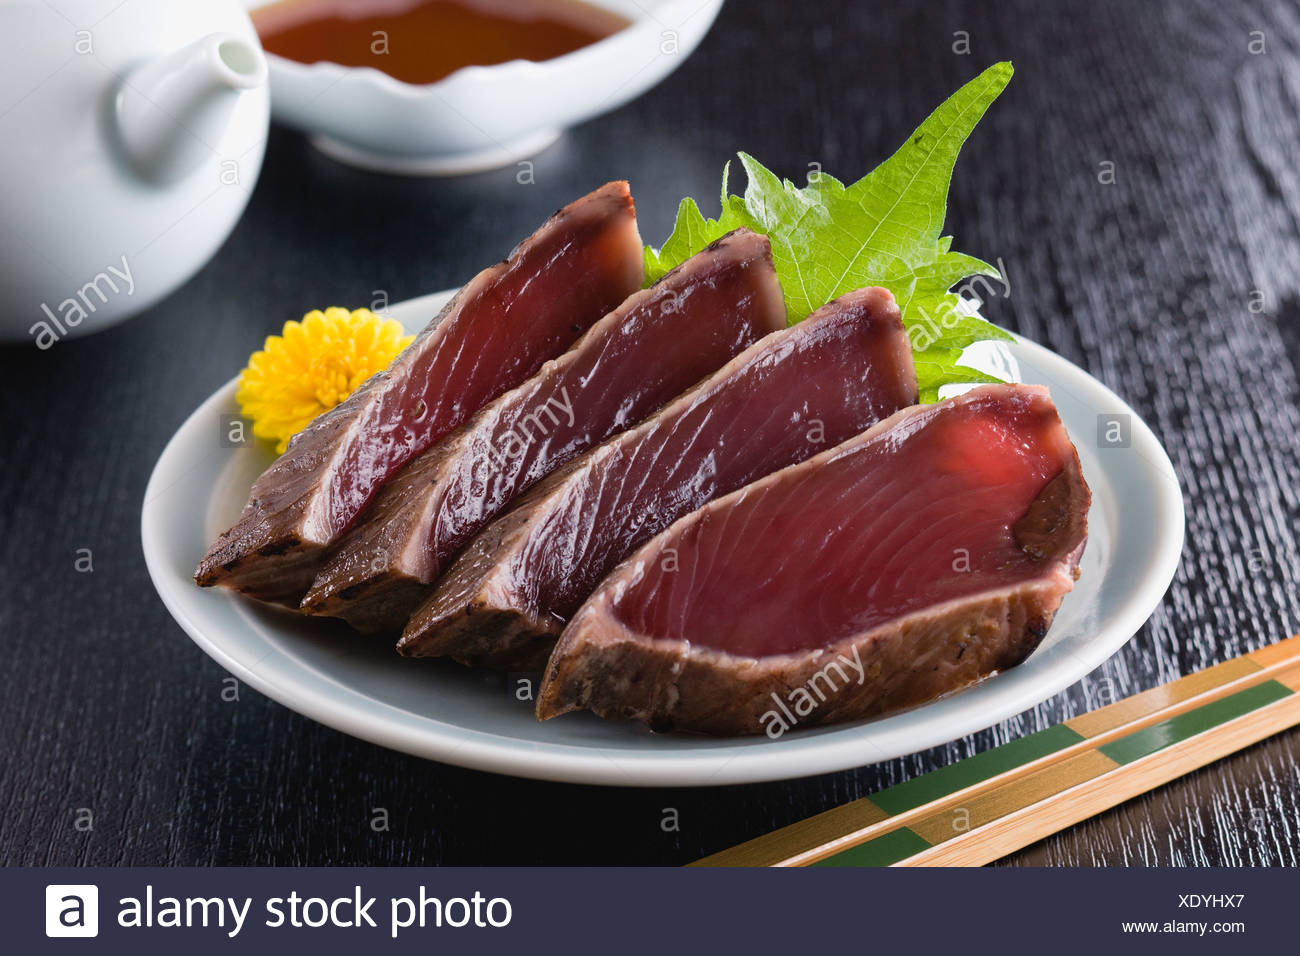 seared-bonito-sashimi-XDYHX7.jpg